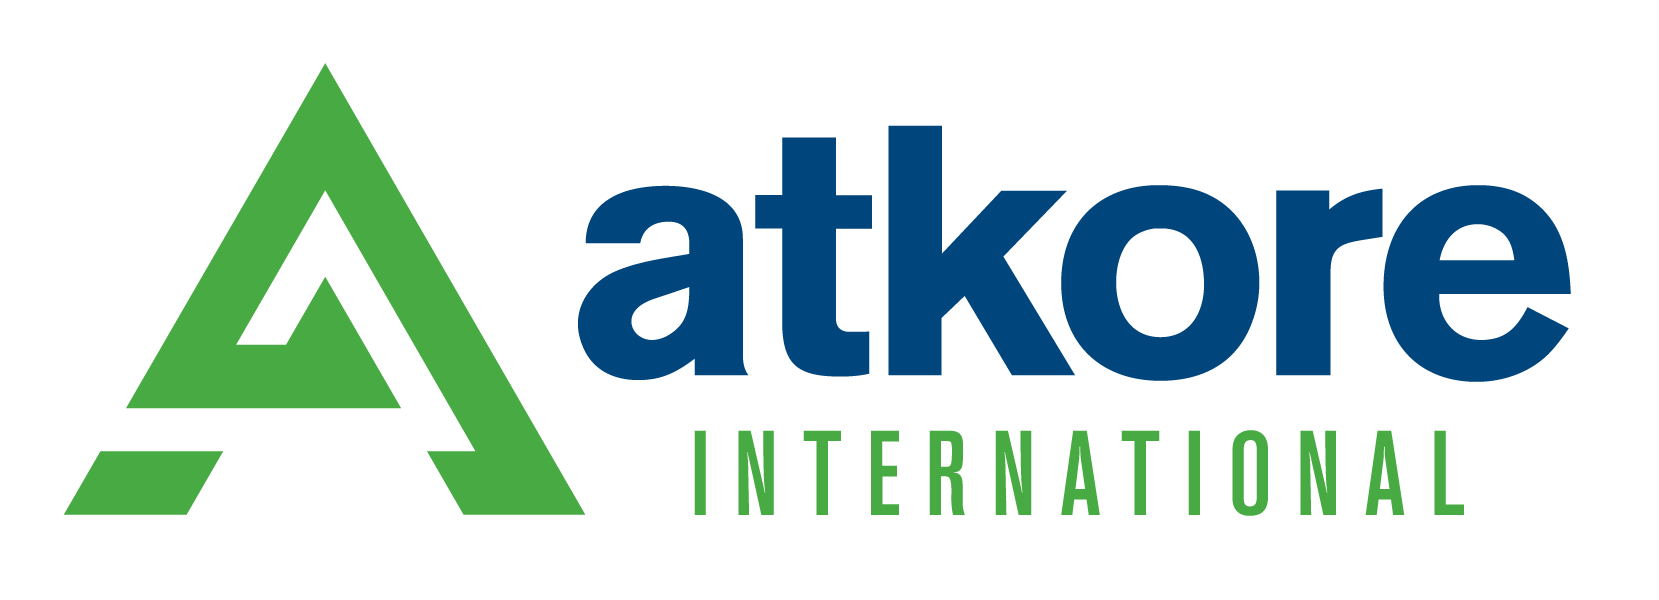 Atkore International Group Inc logo